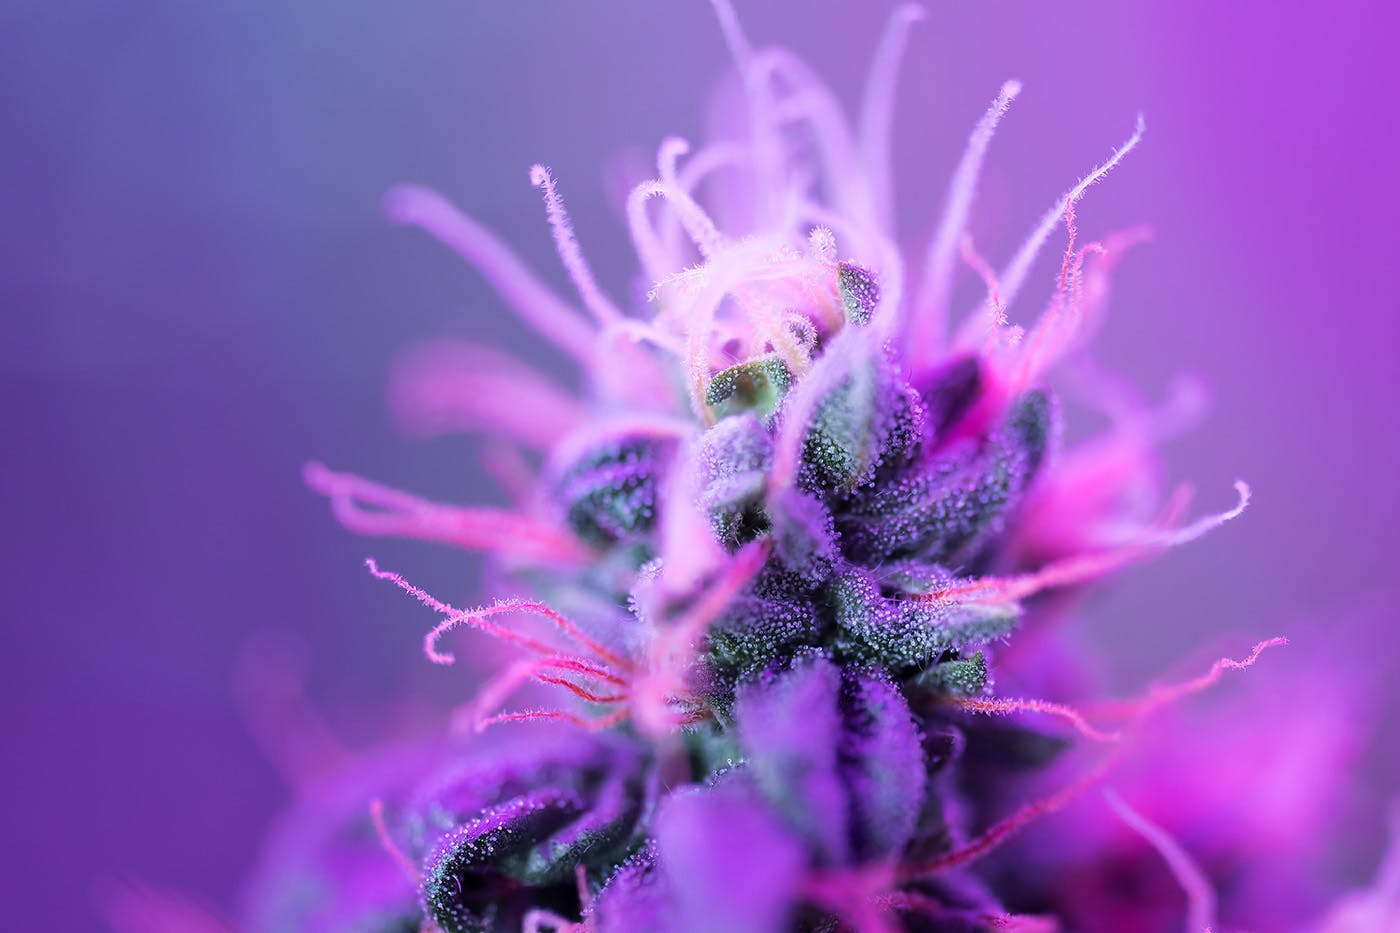 Weed flower under purple grow light